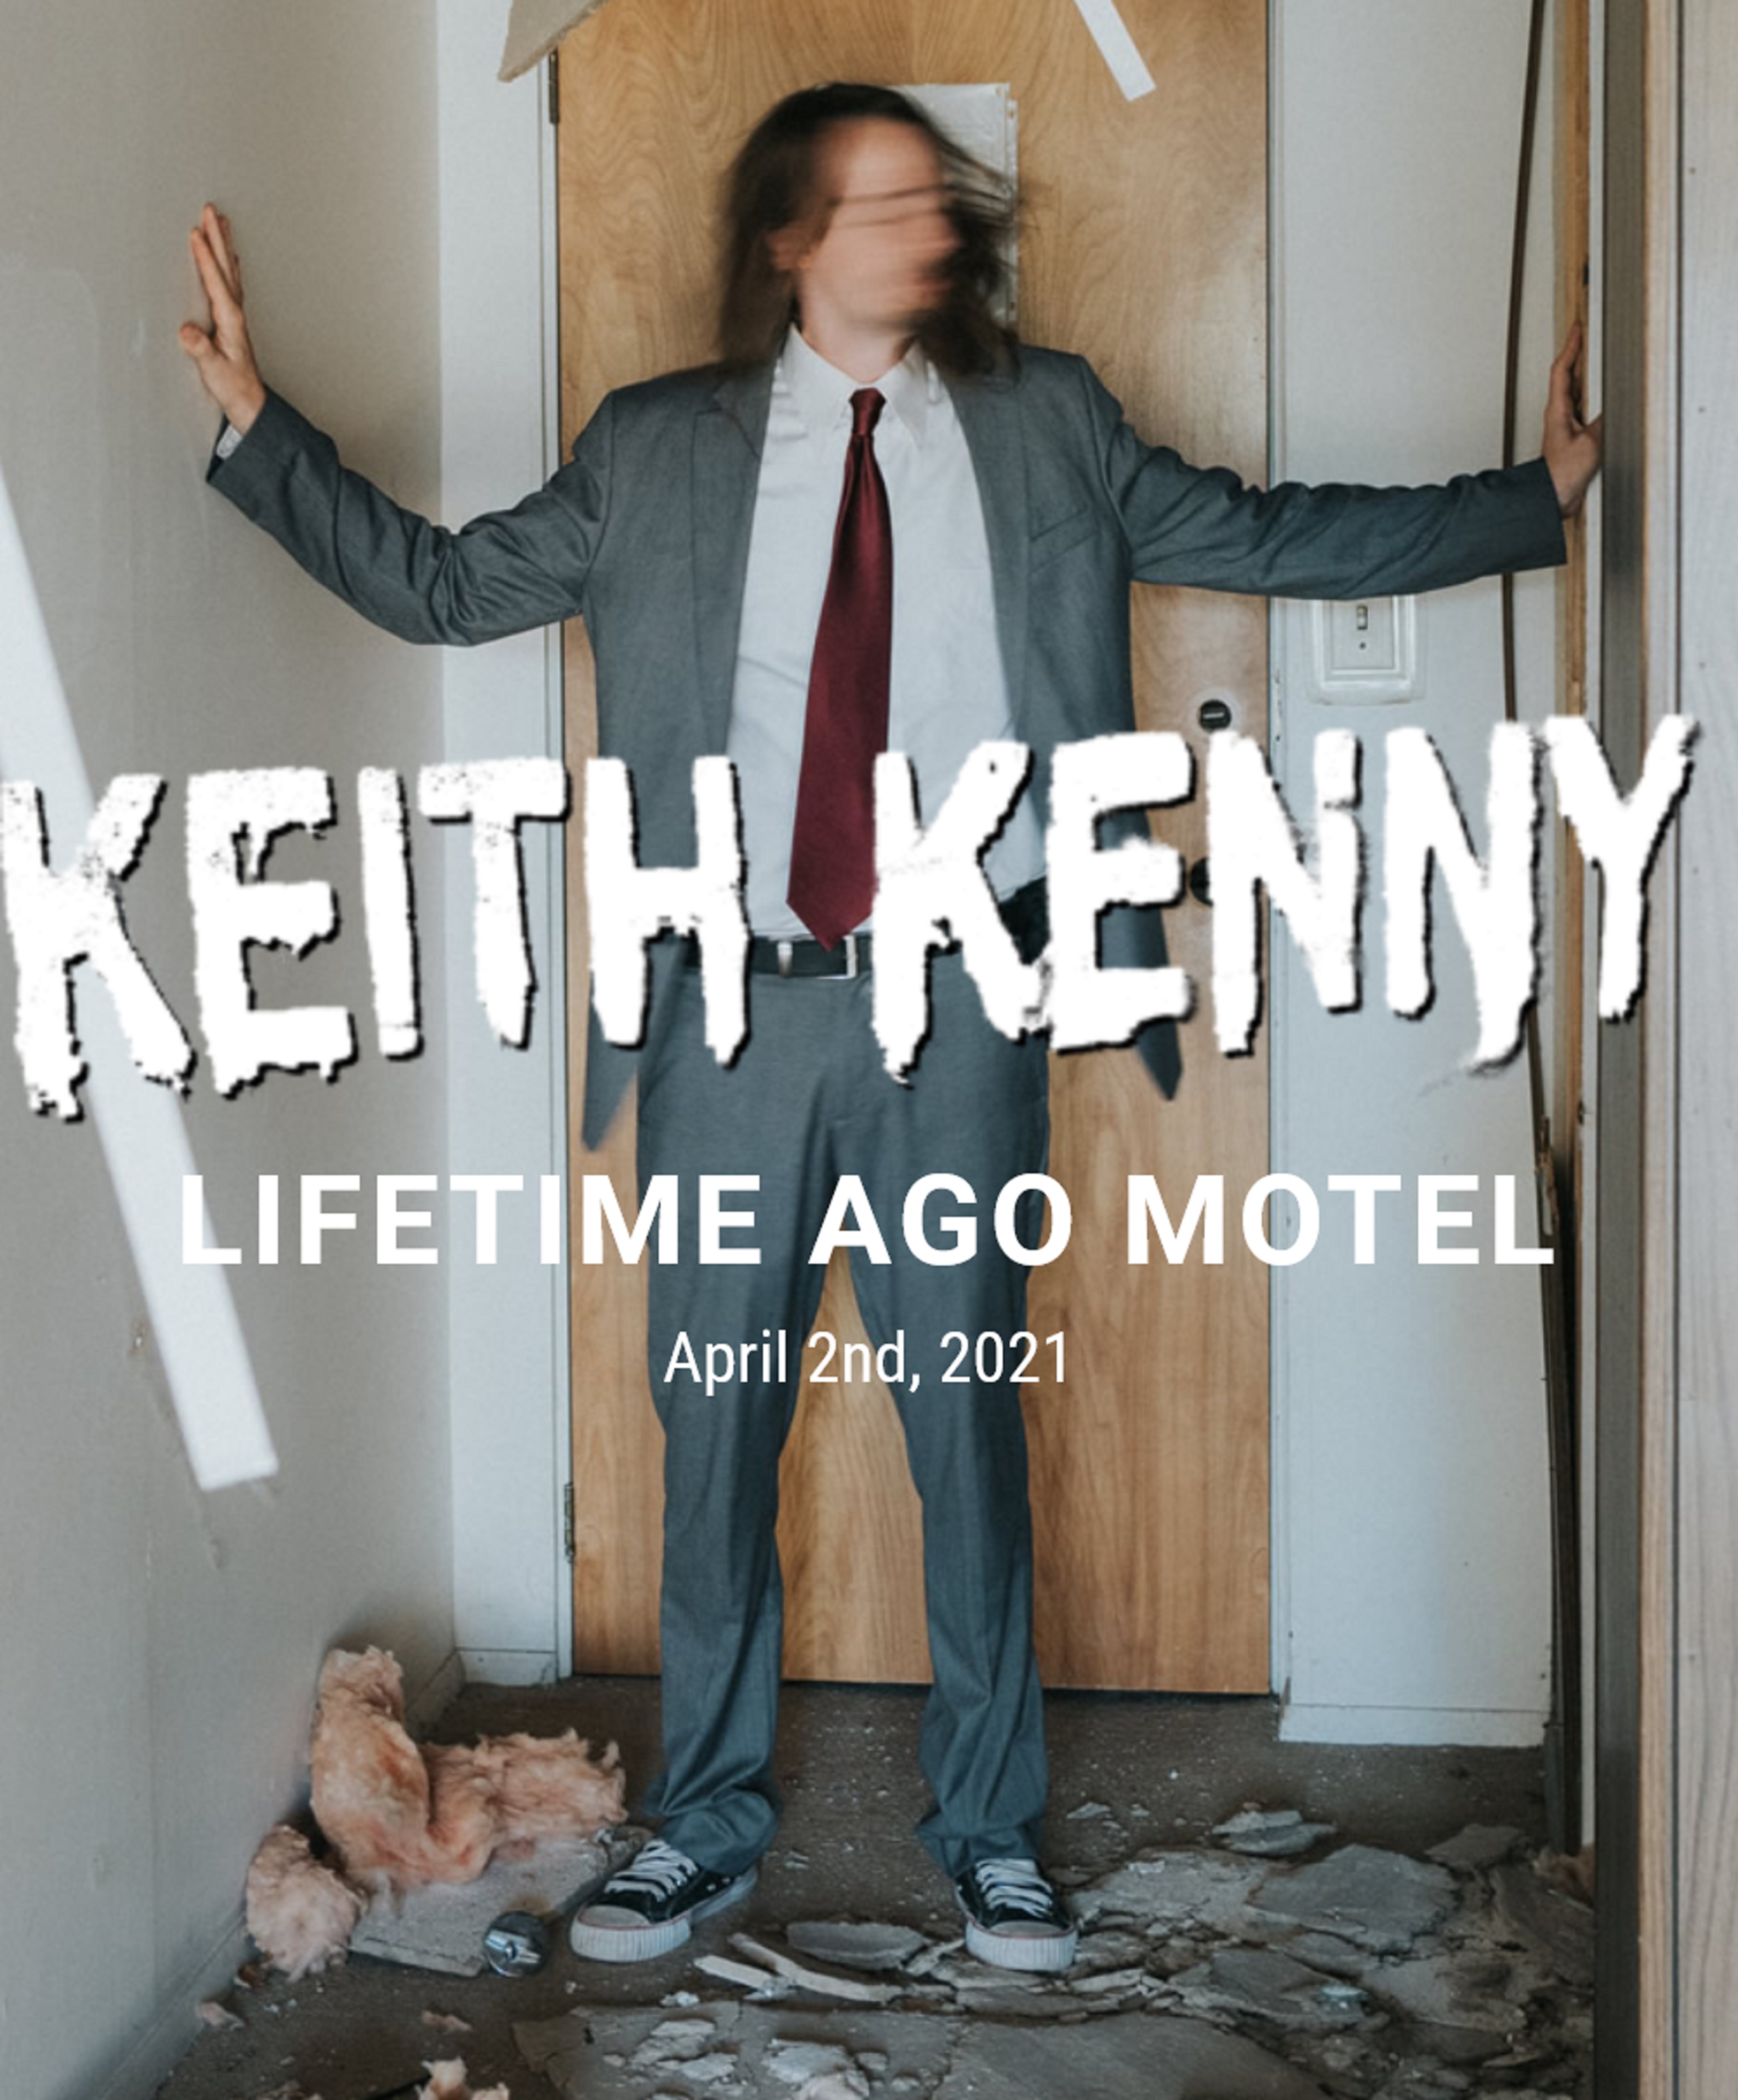 Keith Kenny releasing his 5th album, 'Lifetime Ago Motel'